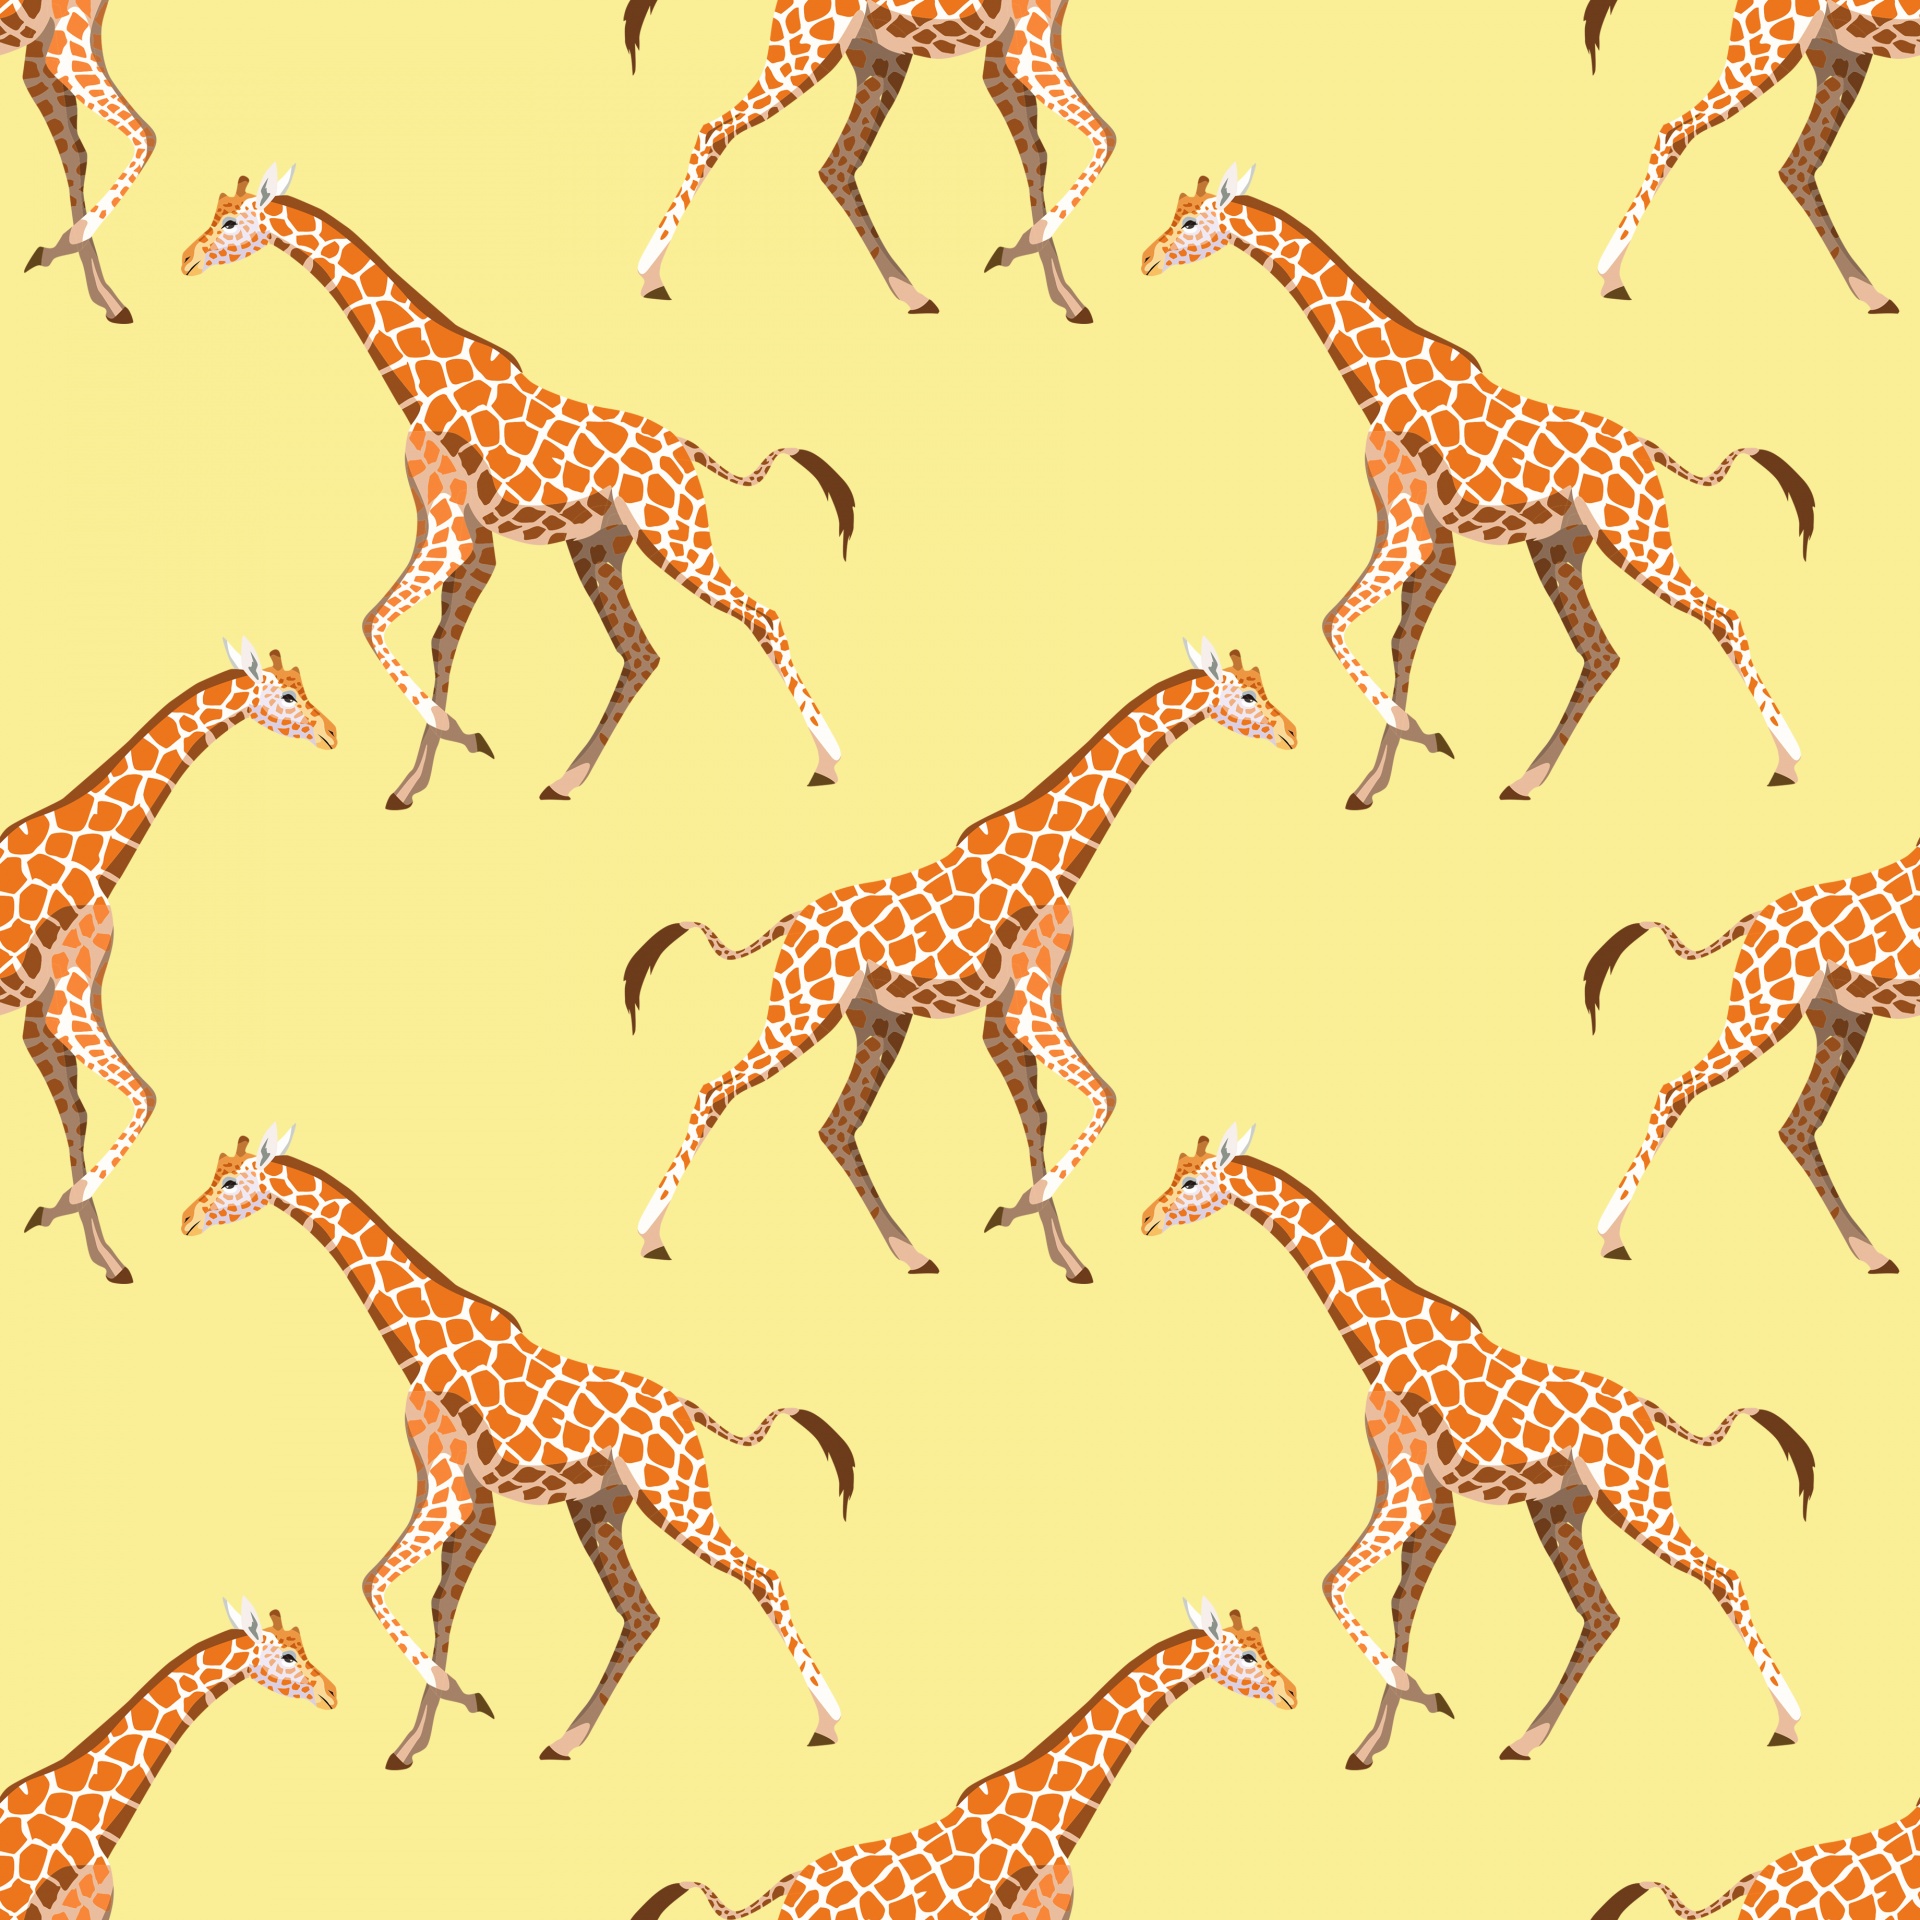 Giraffe wallpaper pattern illustration background